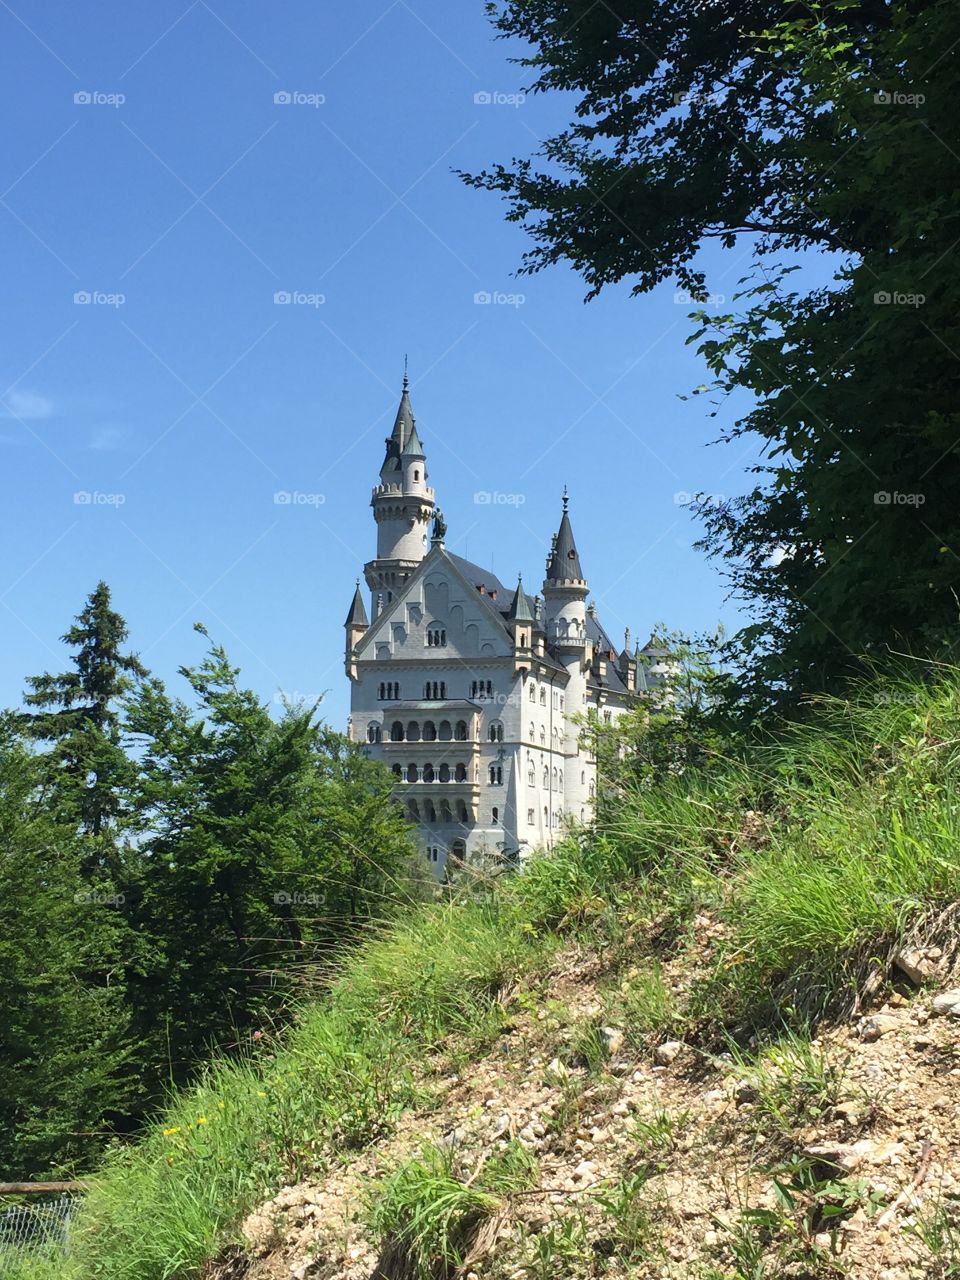 Castle
Bavaria, Germany 